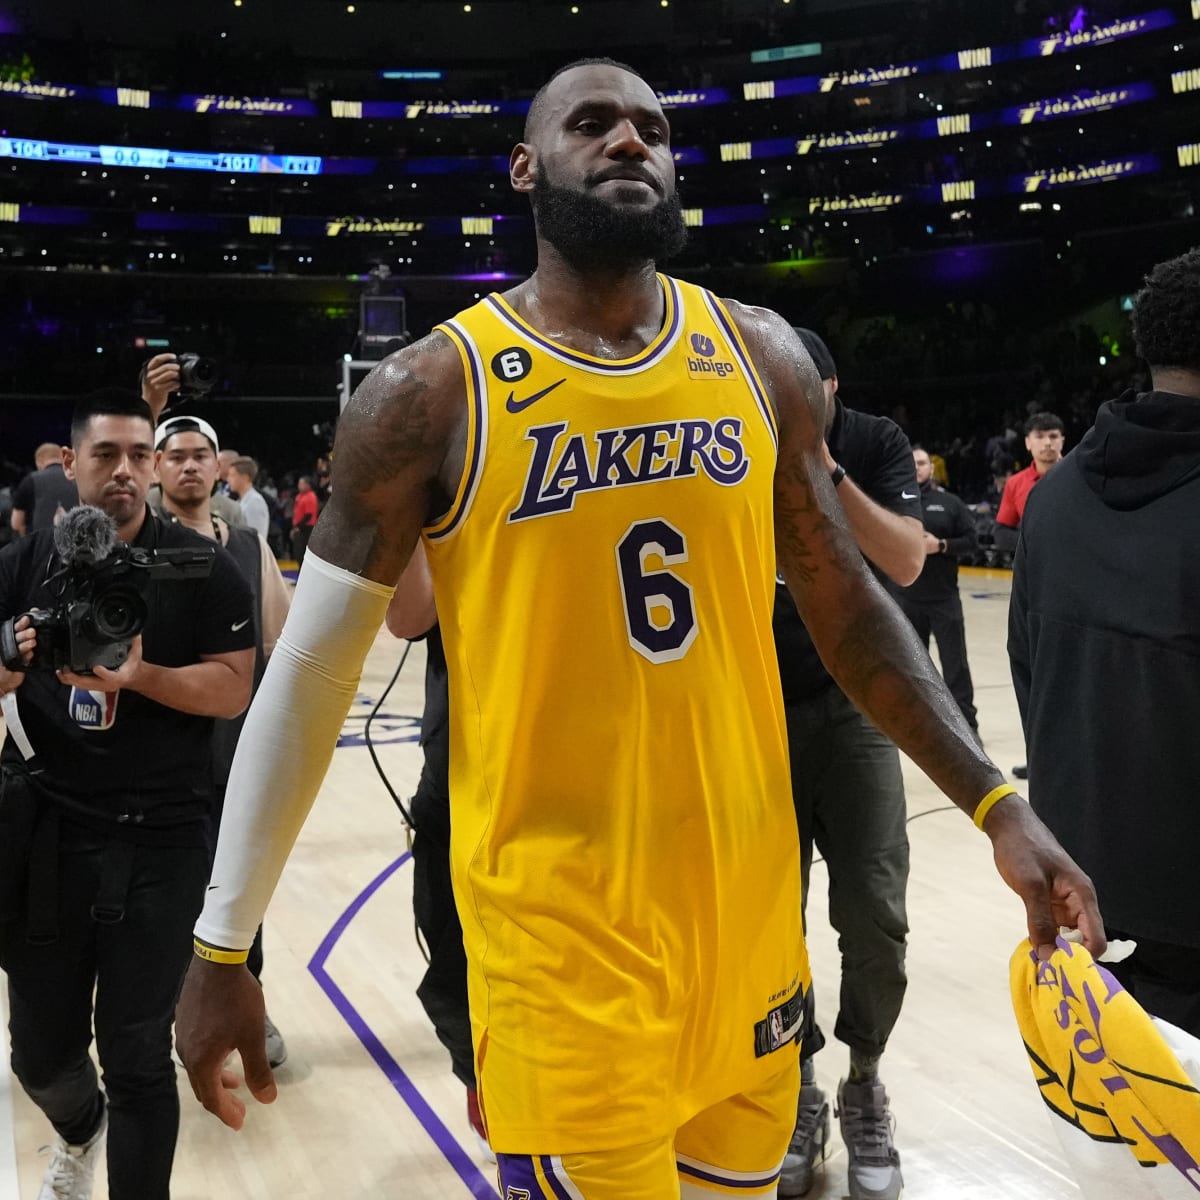 LeBron James' Injury Status for Lakers vs. Warriors Game 5